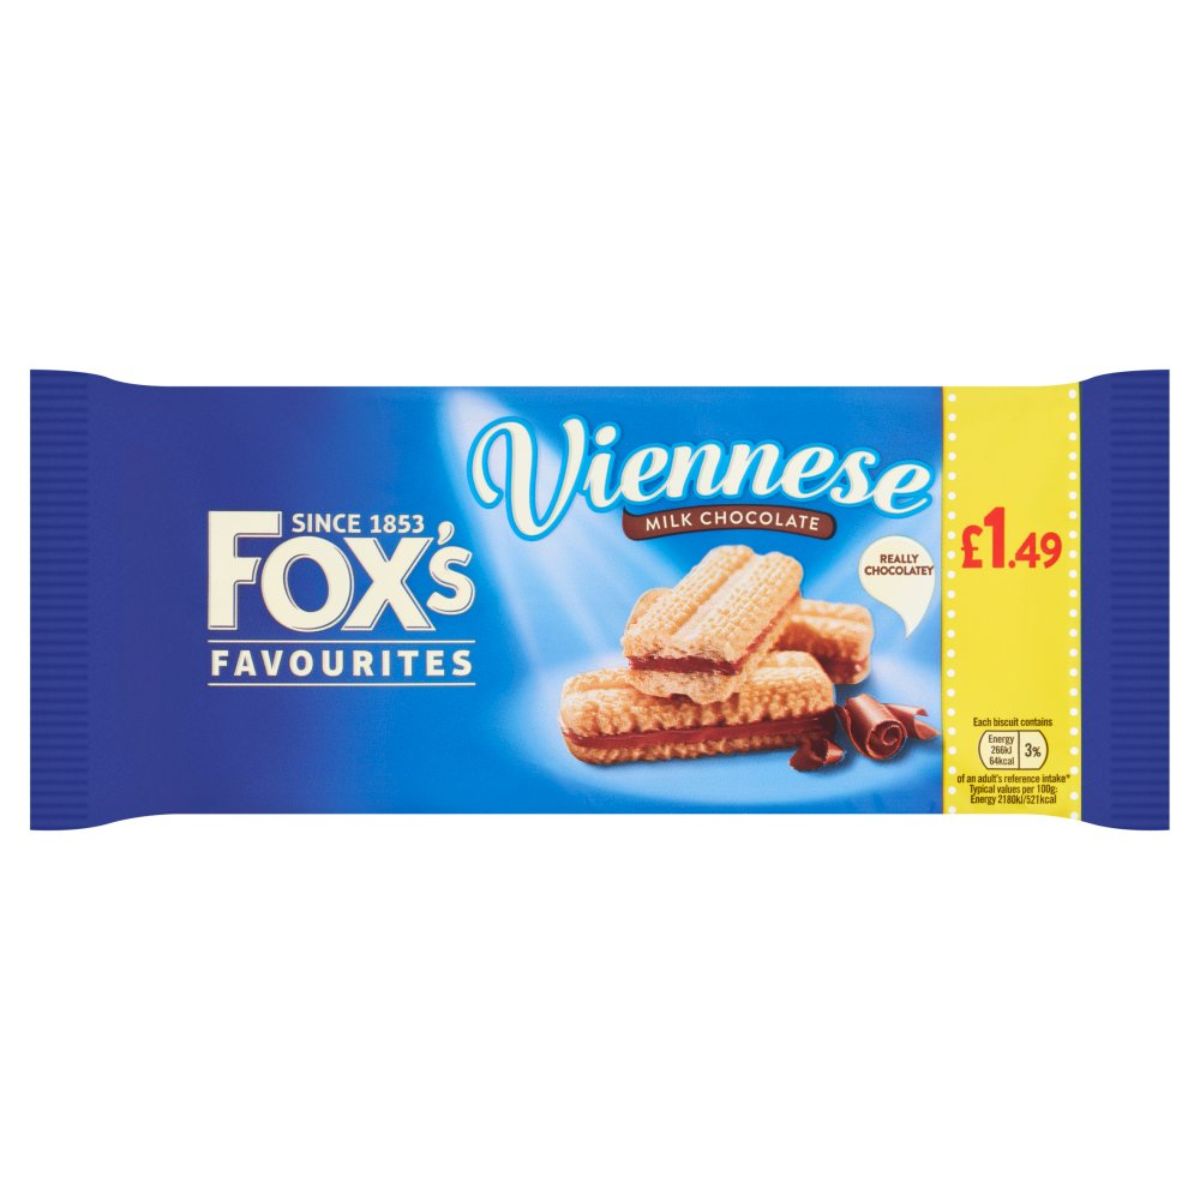 Vienna Fox's Foxs - Viennese Milk Chocolate - 120g.